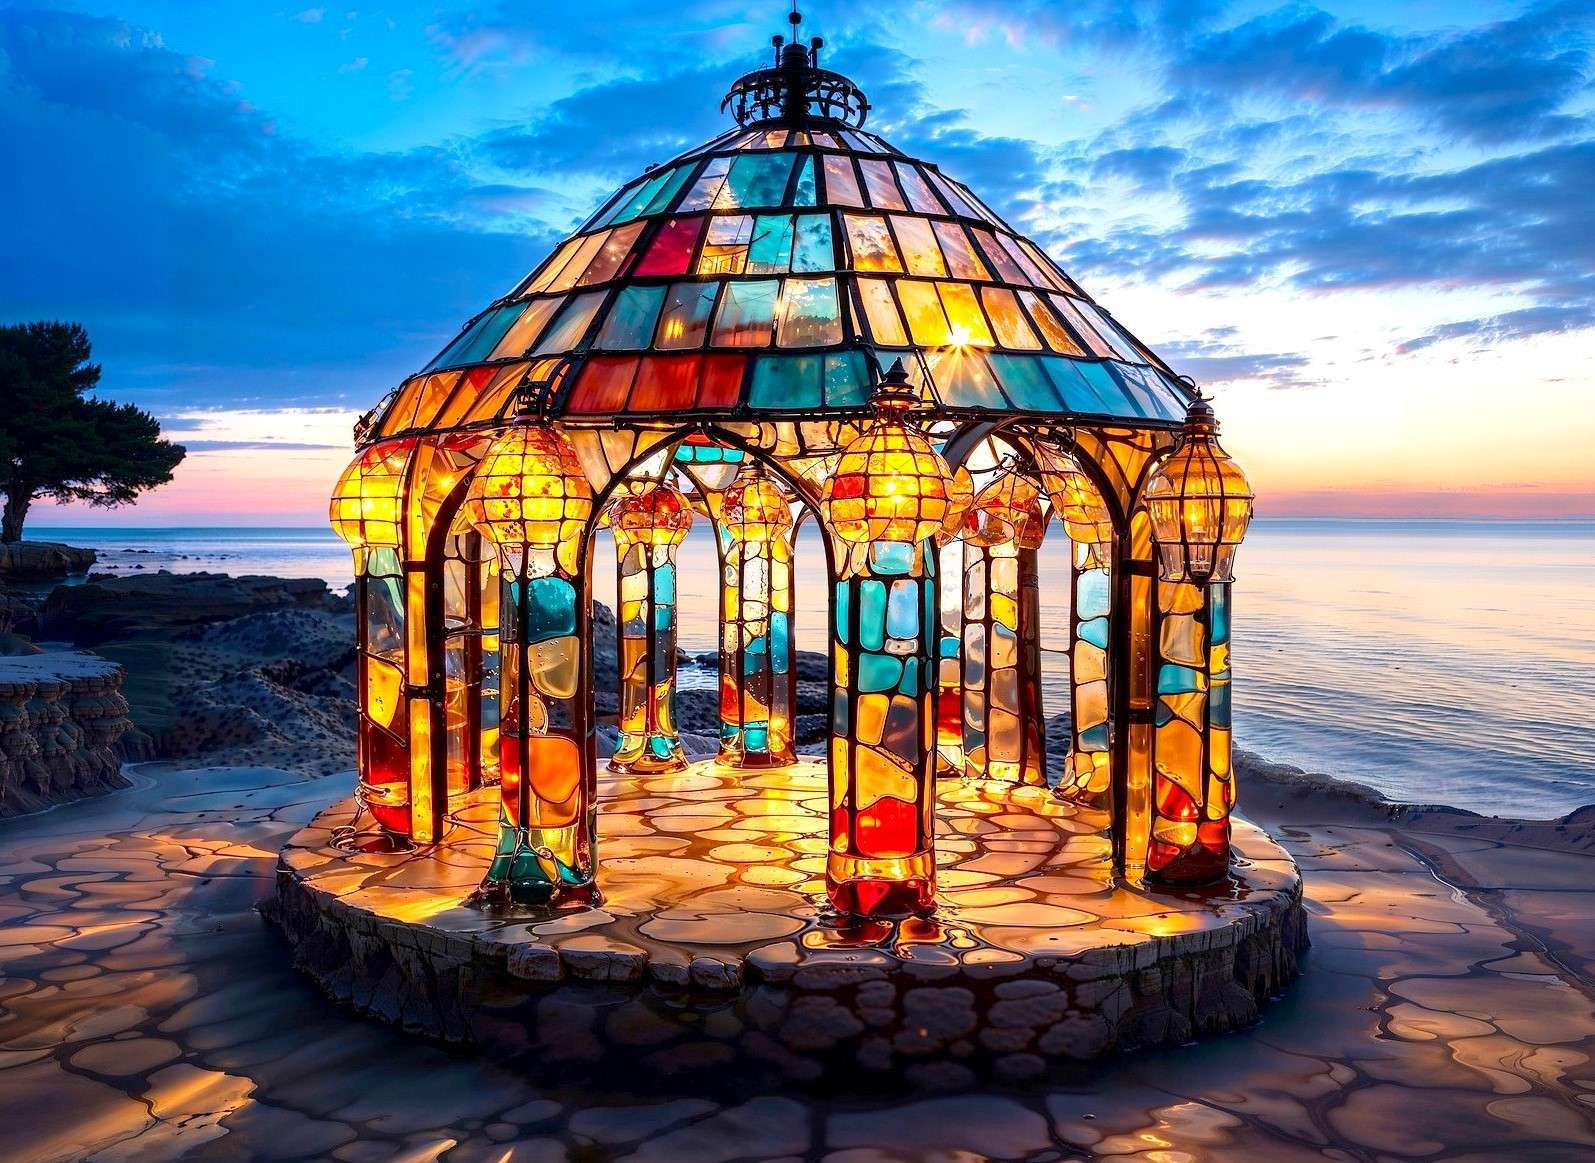 Stained glass gazebo in a seaside resort jigsaw puzzle online